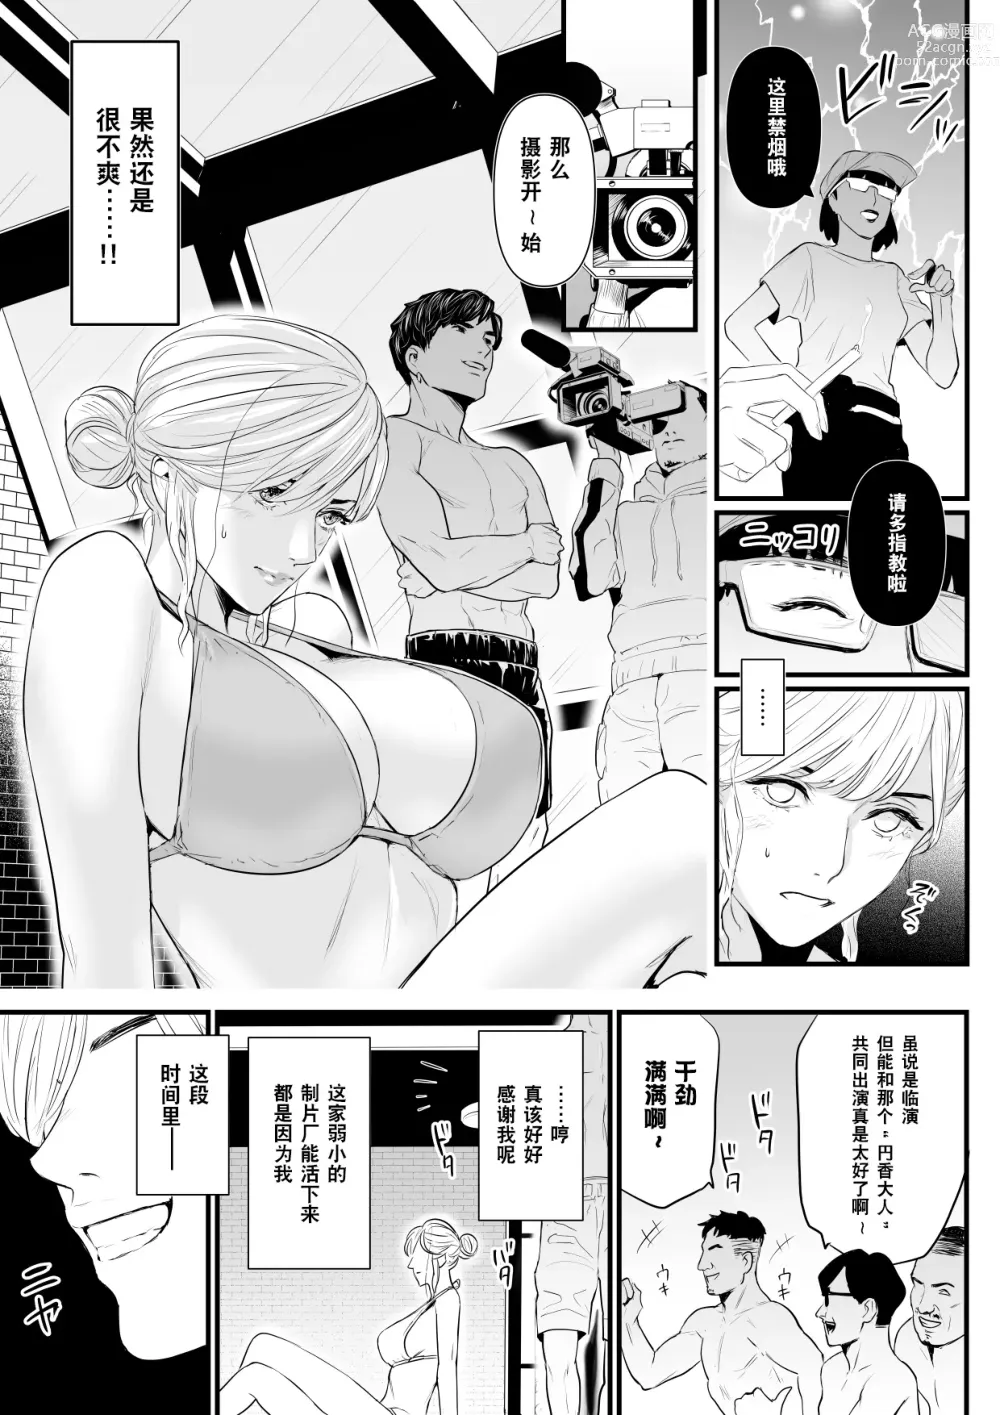 Page 7 of doujinshi 直到AV女优(23岁)撤回引退之前都将不断高潮2『时间停止道具篇』